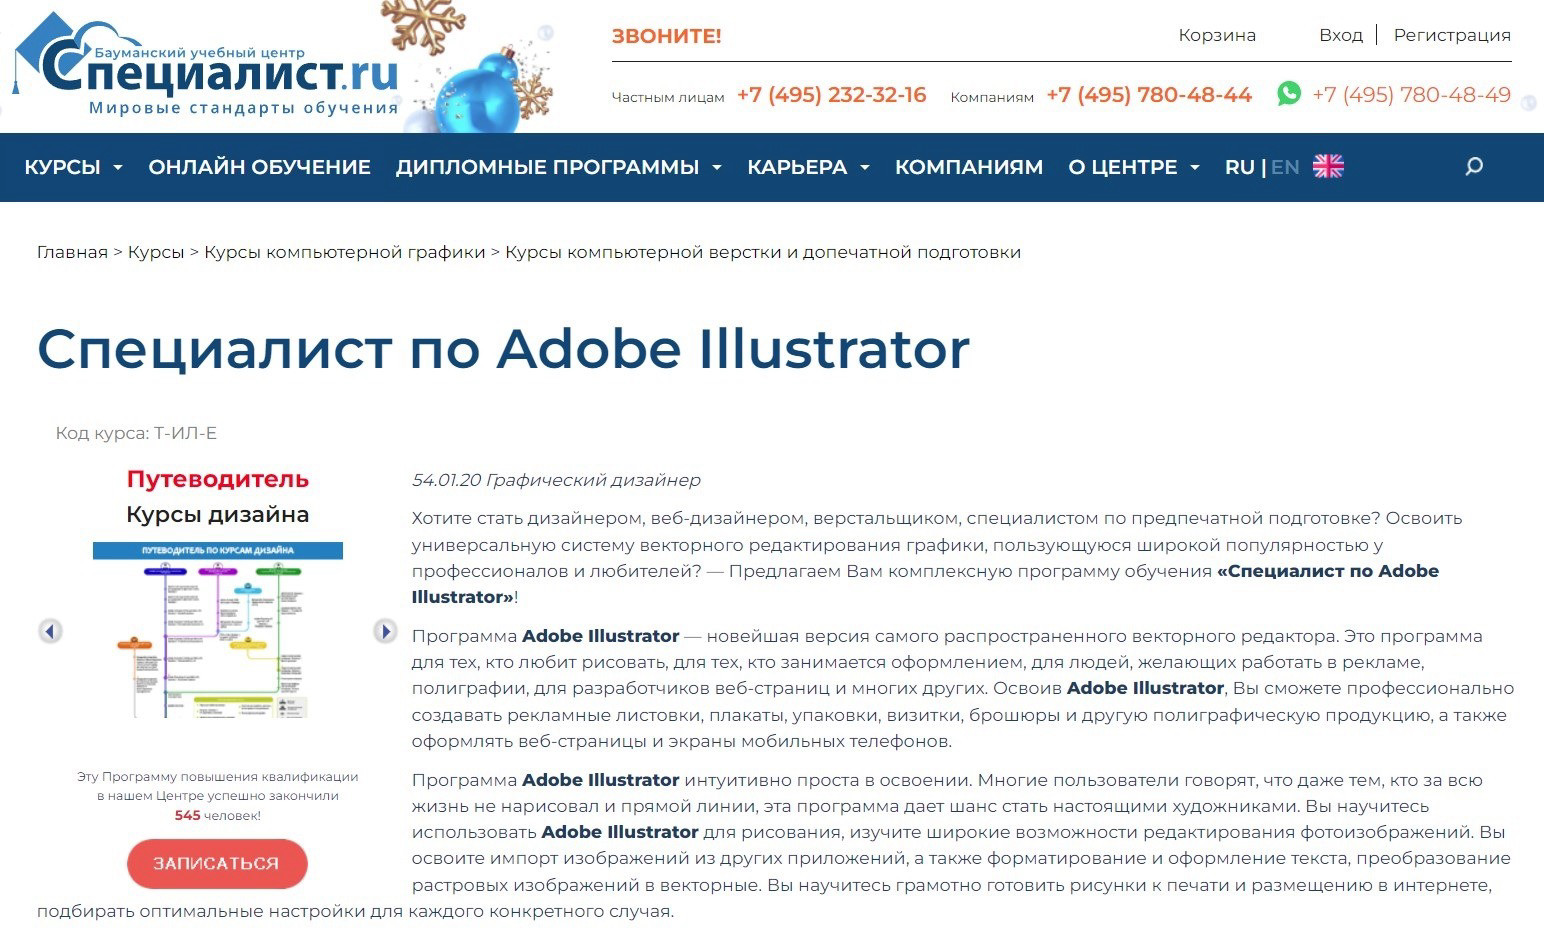 "Специалист по Adobe Illustrator" от центра Специалист